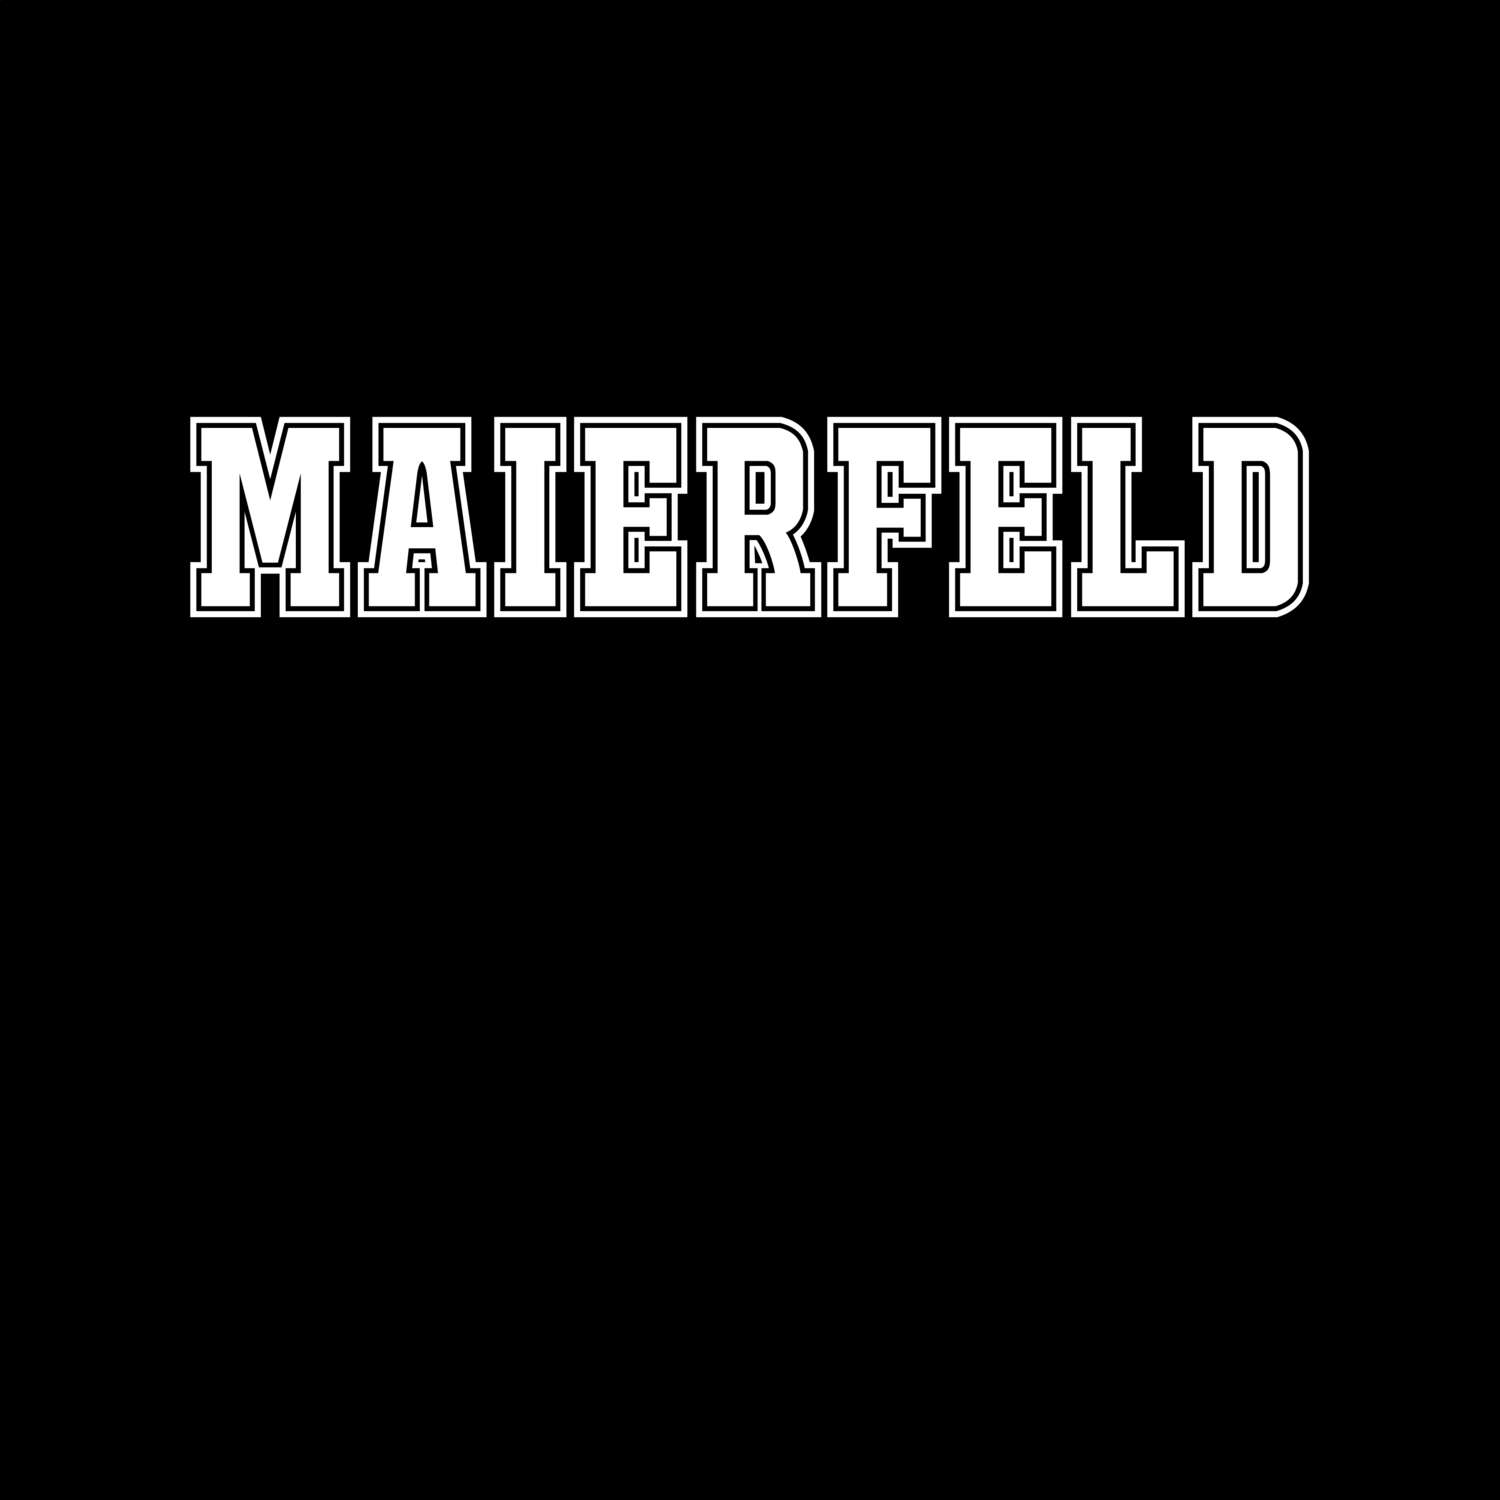 Maierfeld T-Shirt »Classic«